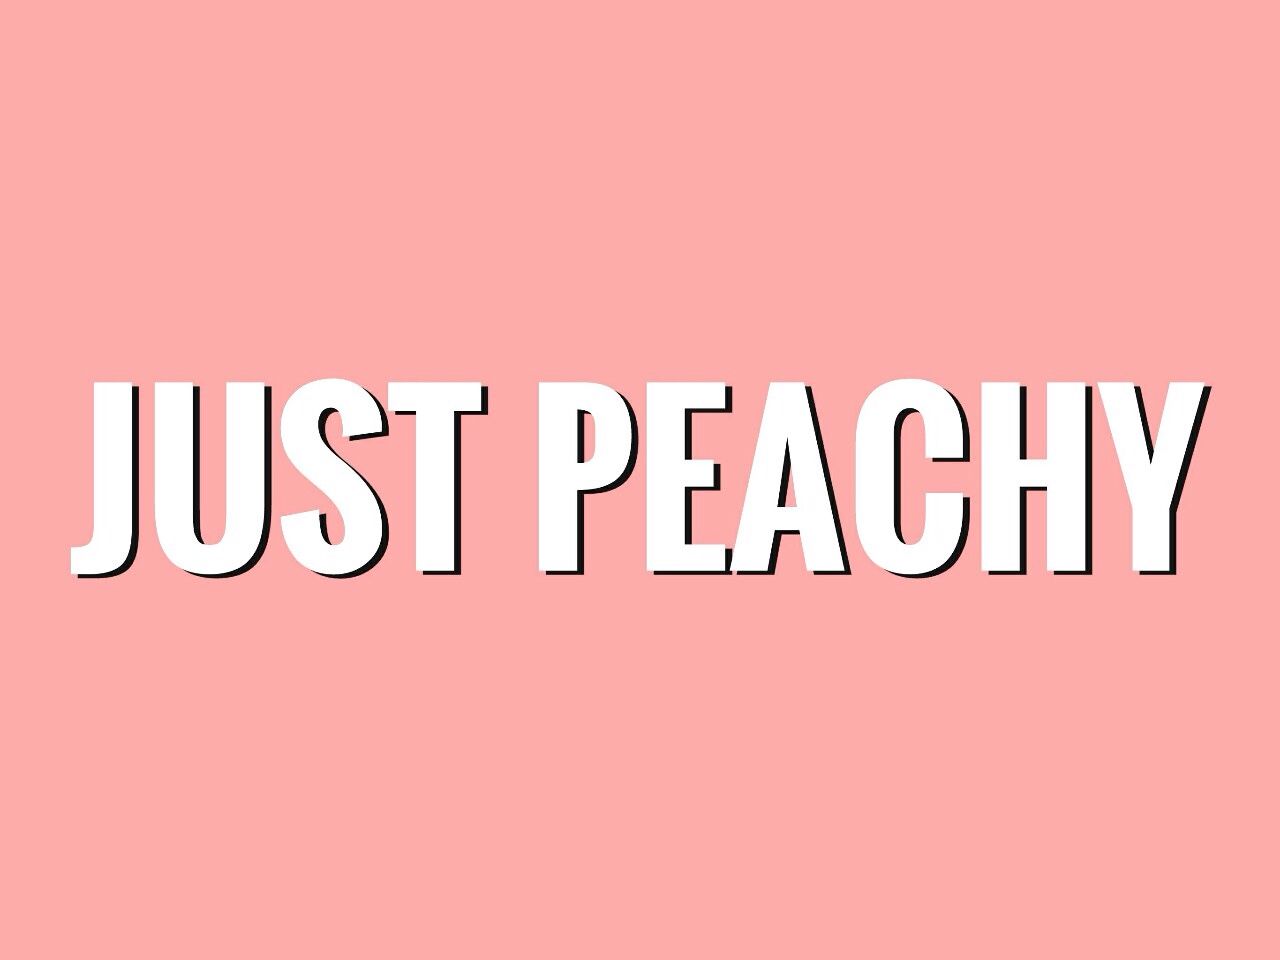 Cute peach quotes tumblr Tumblr quote stickers redbubble